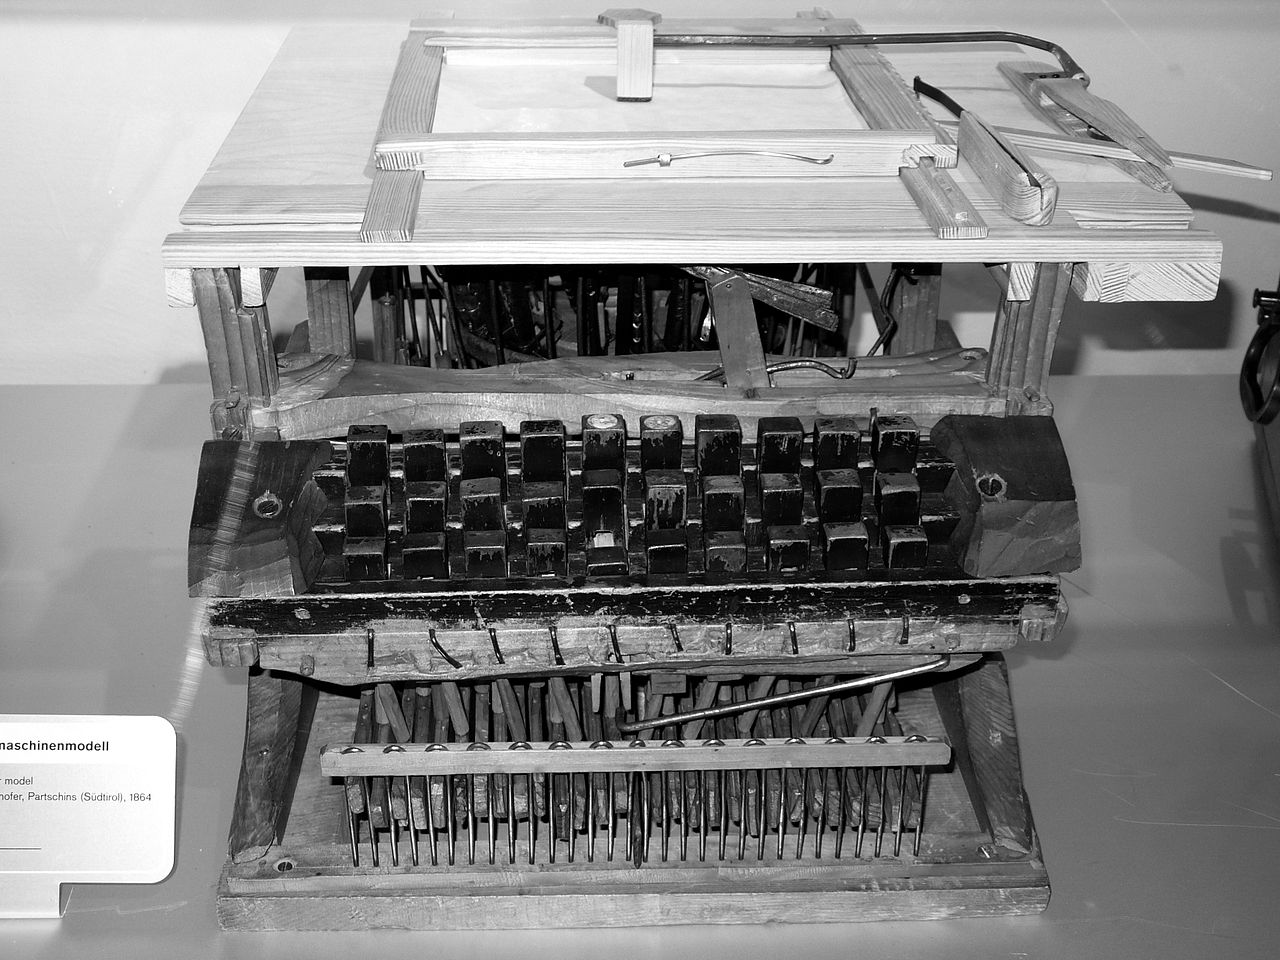 Mitterhofer's Prototype Typewriter